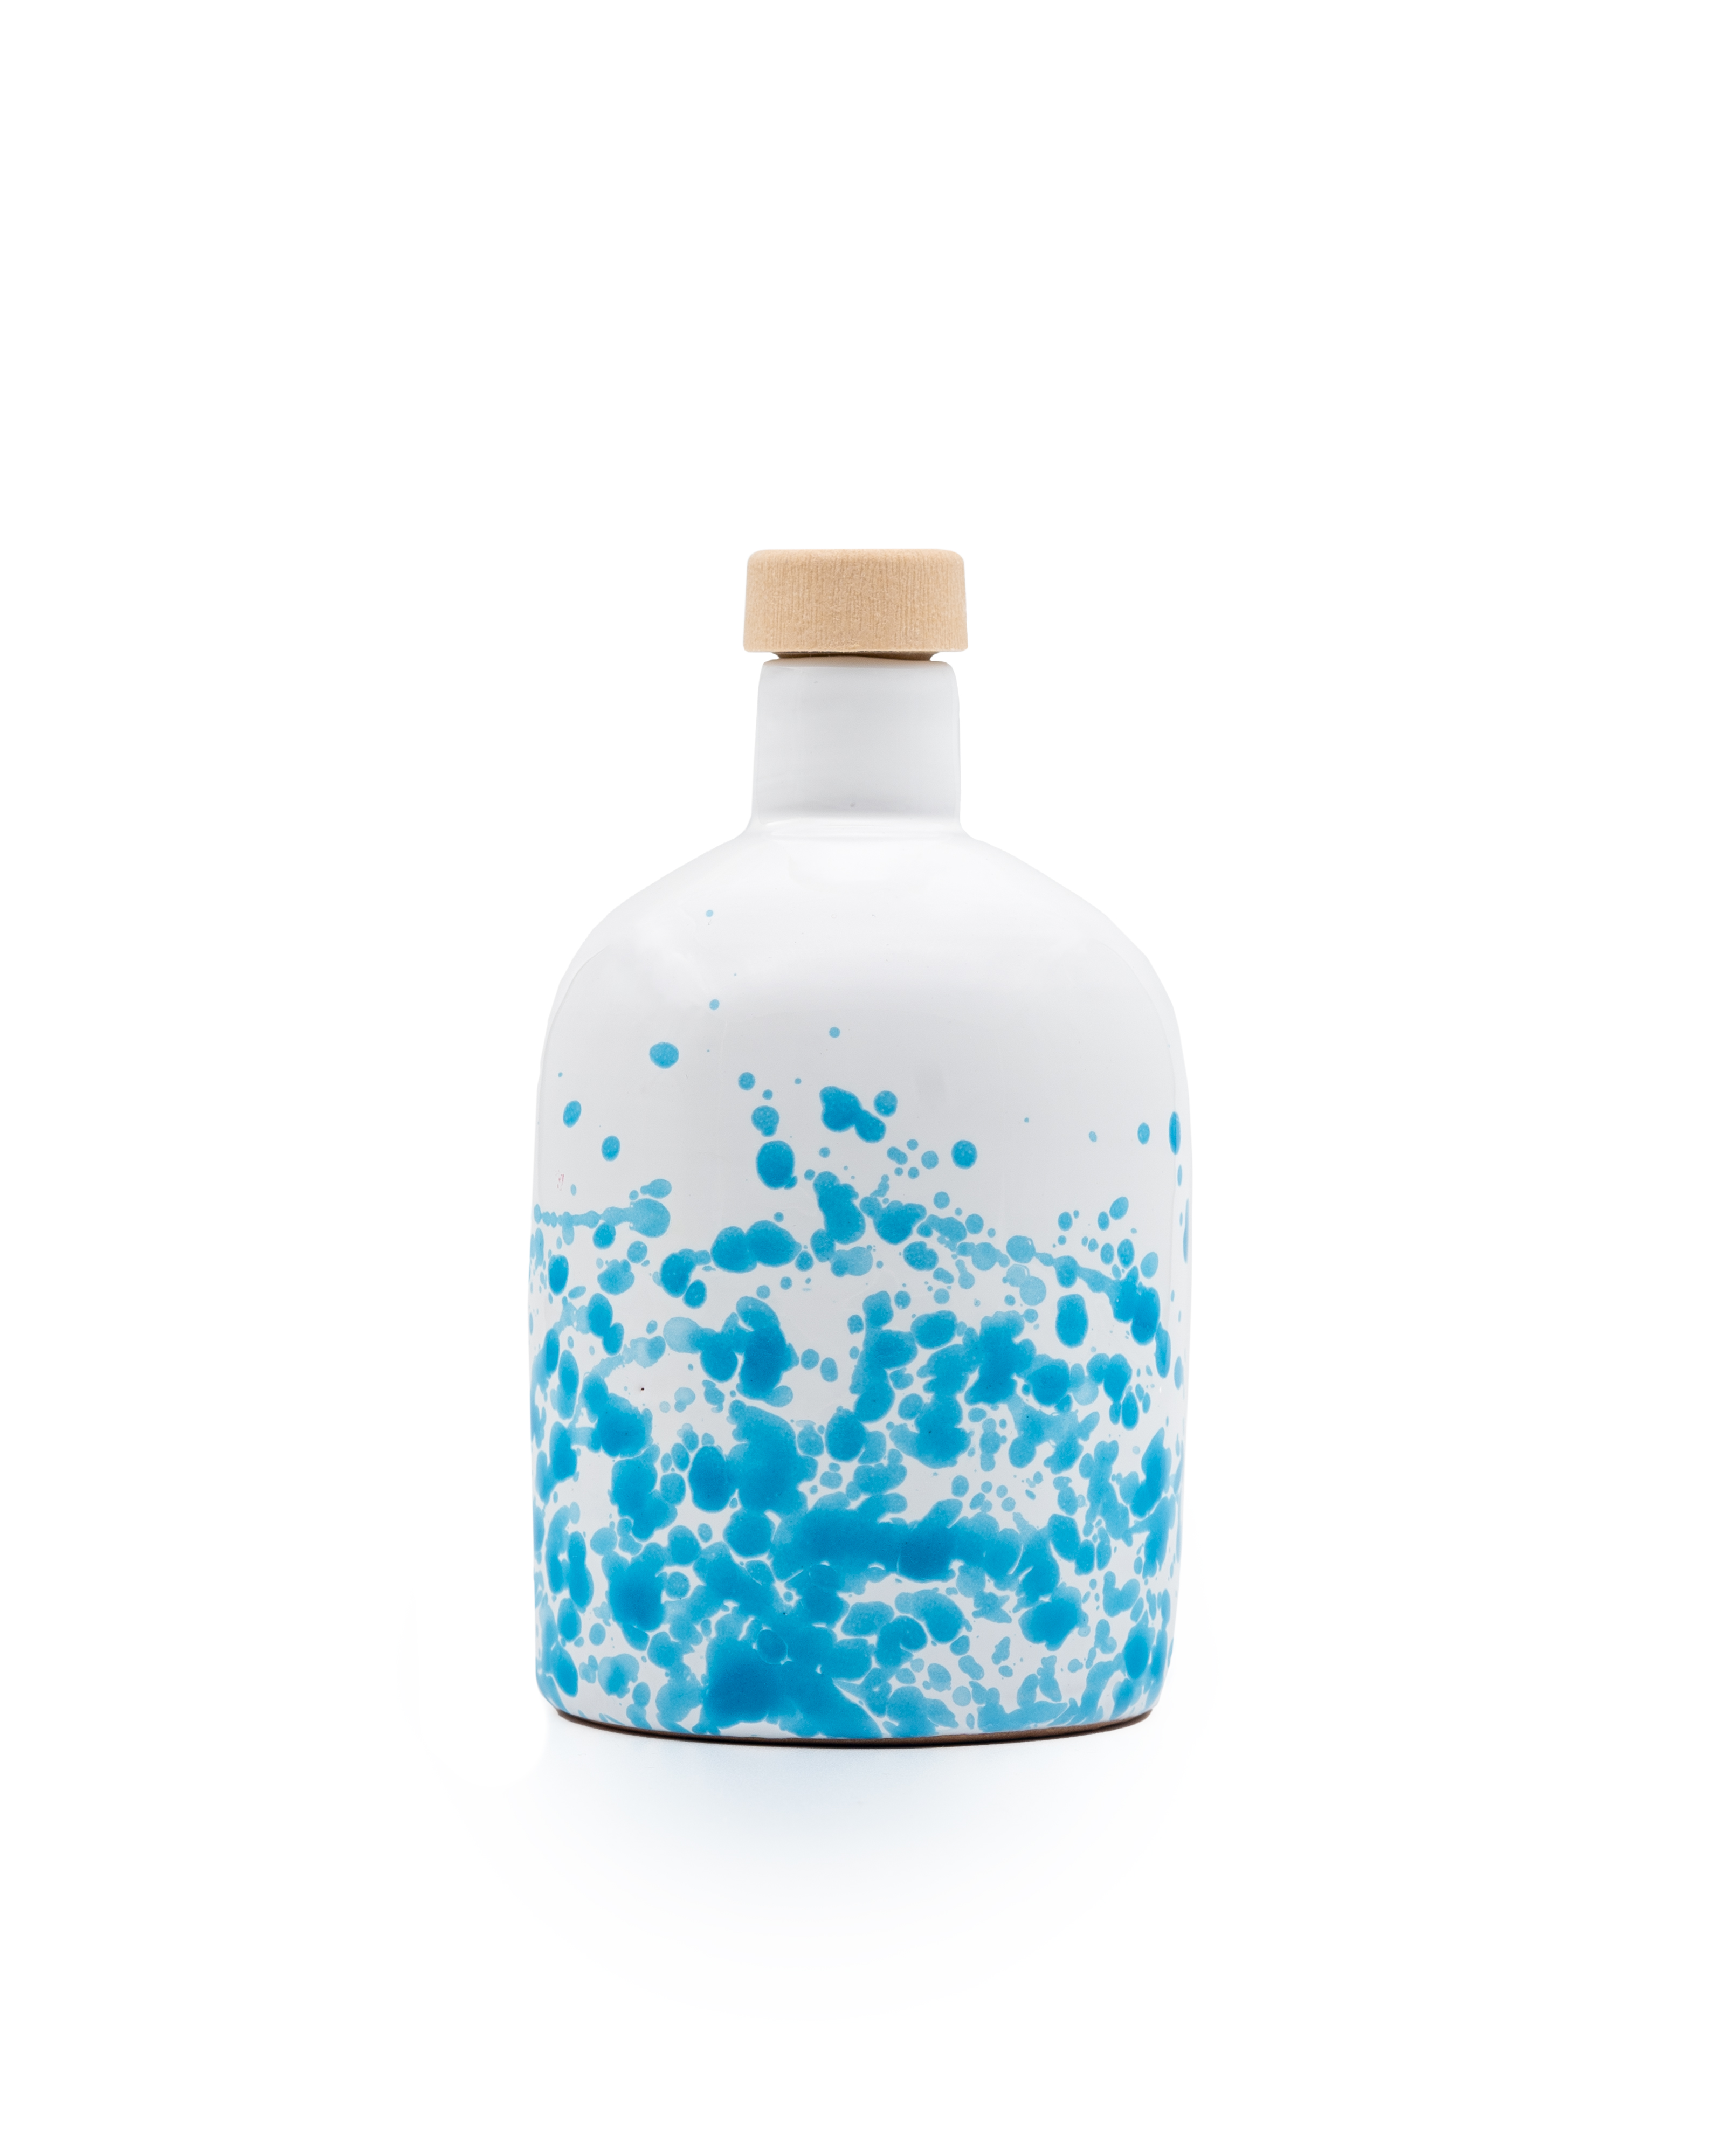 ALLEGRO Aceite de Oliva Extra Virgen nativo, filtrado, botella de cerámica azul de 250ml.